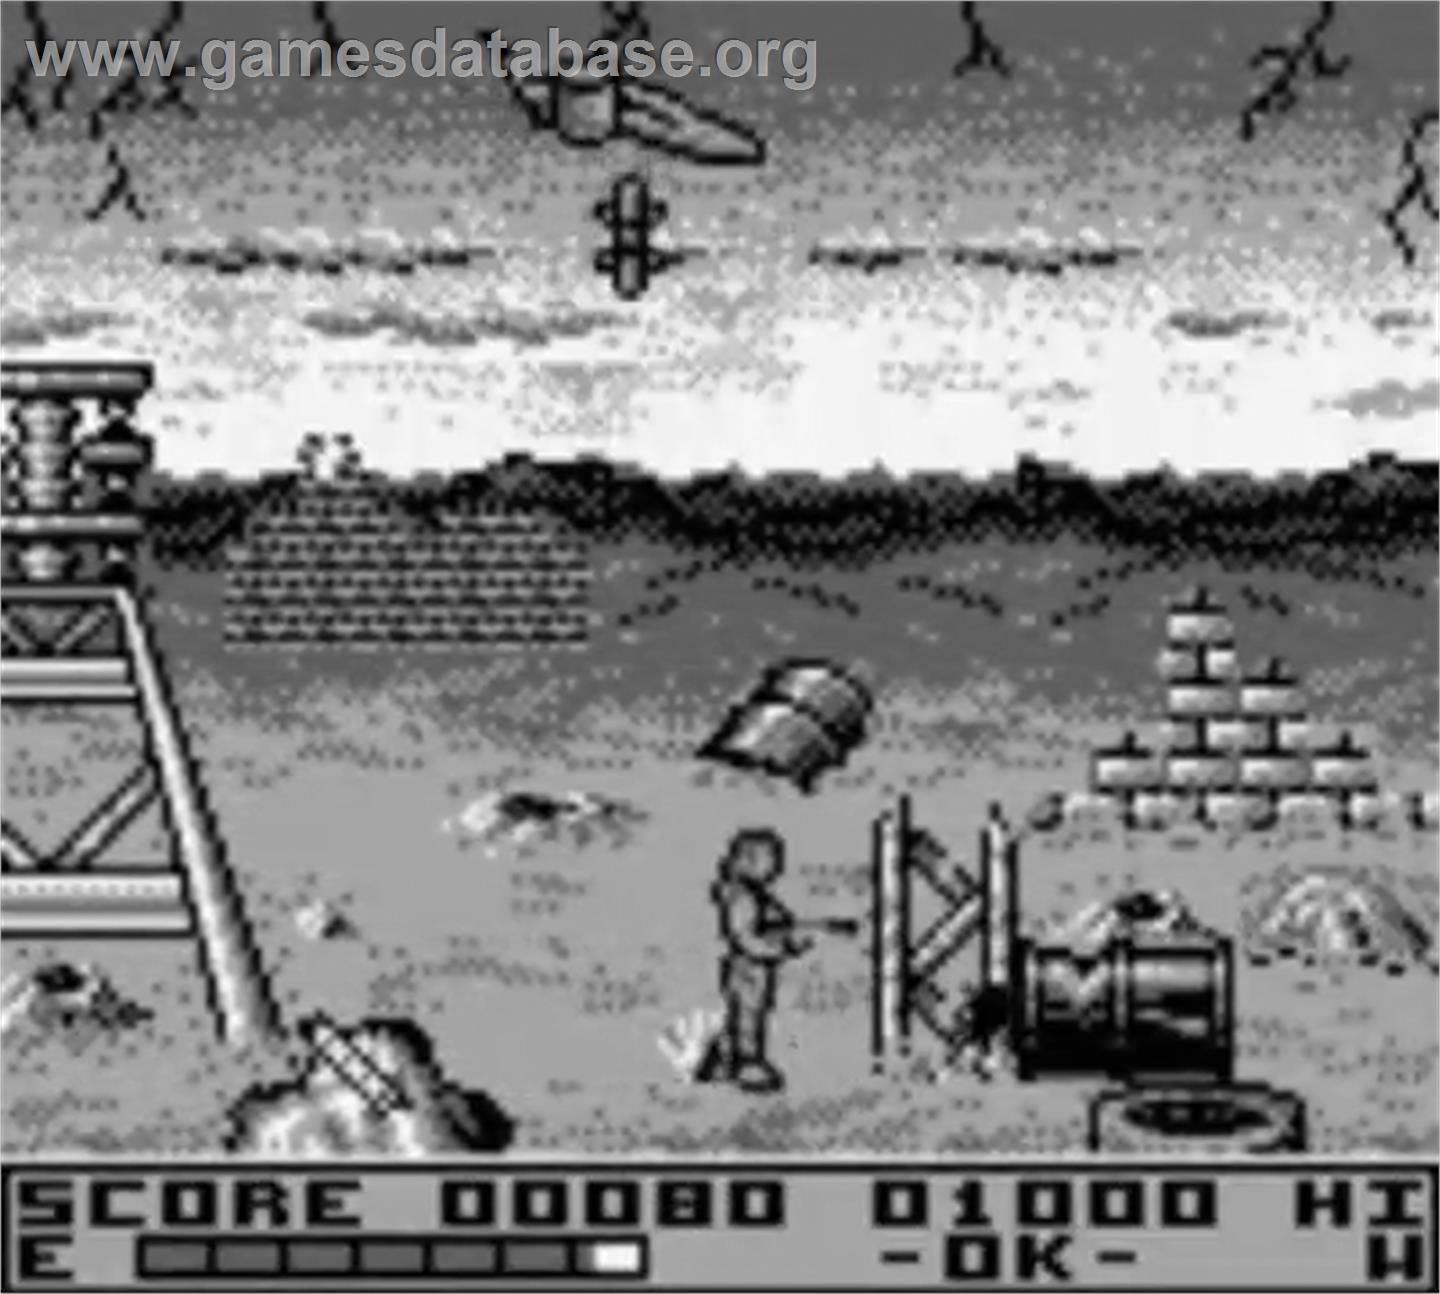 Terminator 2 - Judgment Day - Nintendo Game Boy - Artwork - In Game